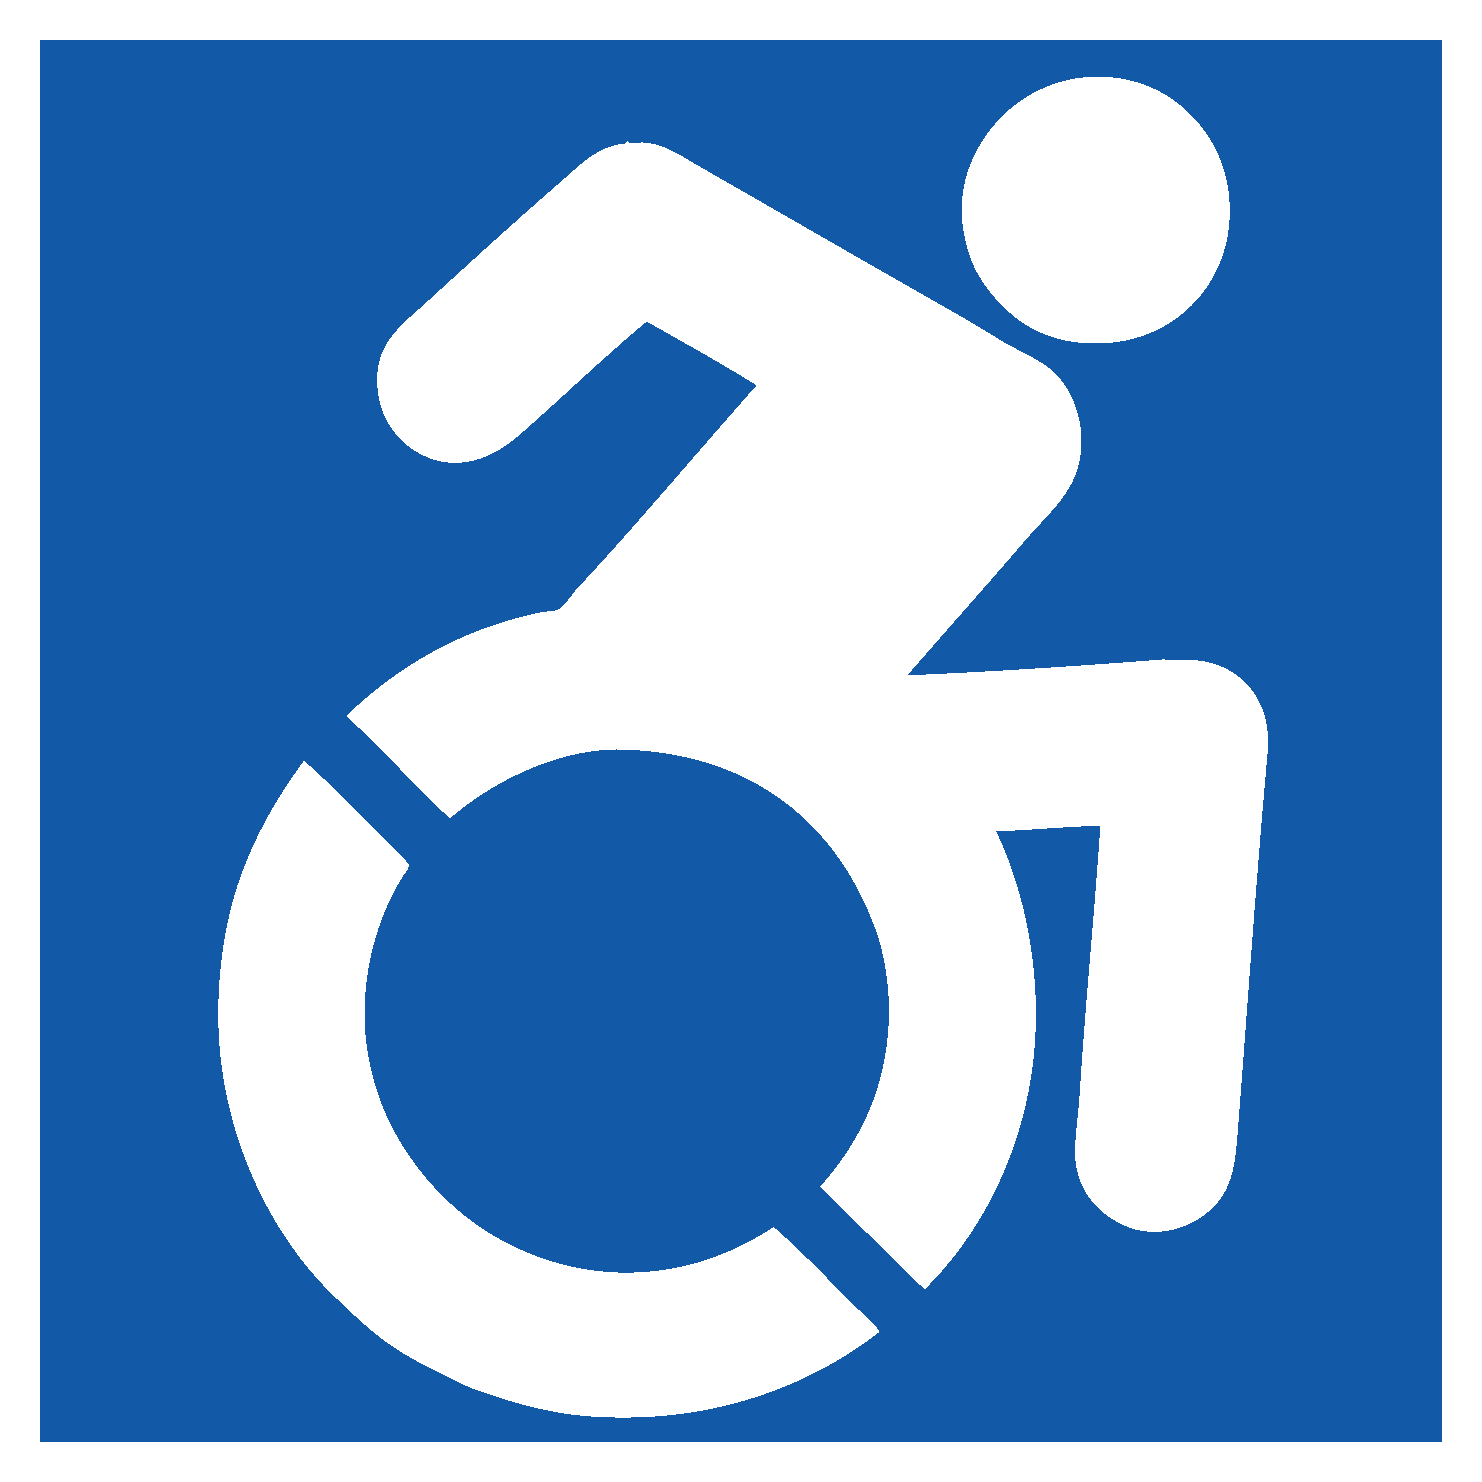 Handicap Logo Vector | Free Download Clip Art | Free Clip Art | on ...